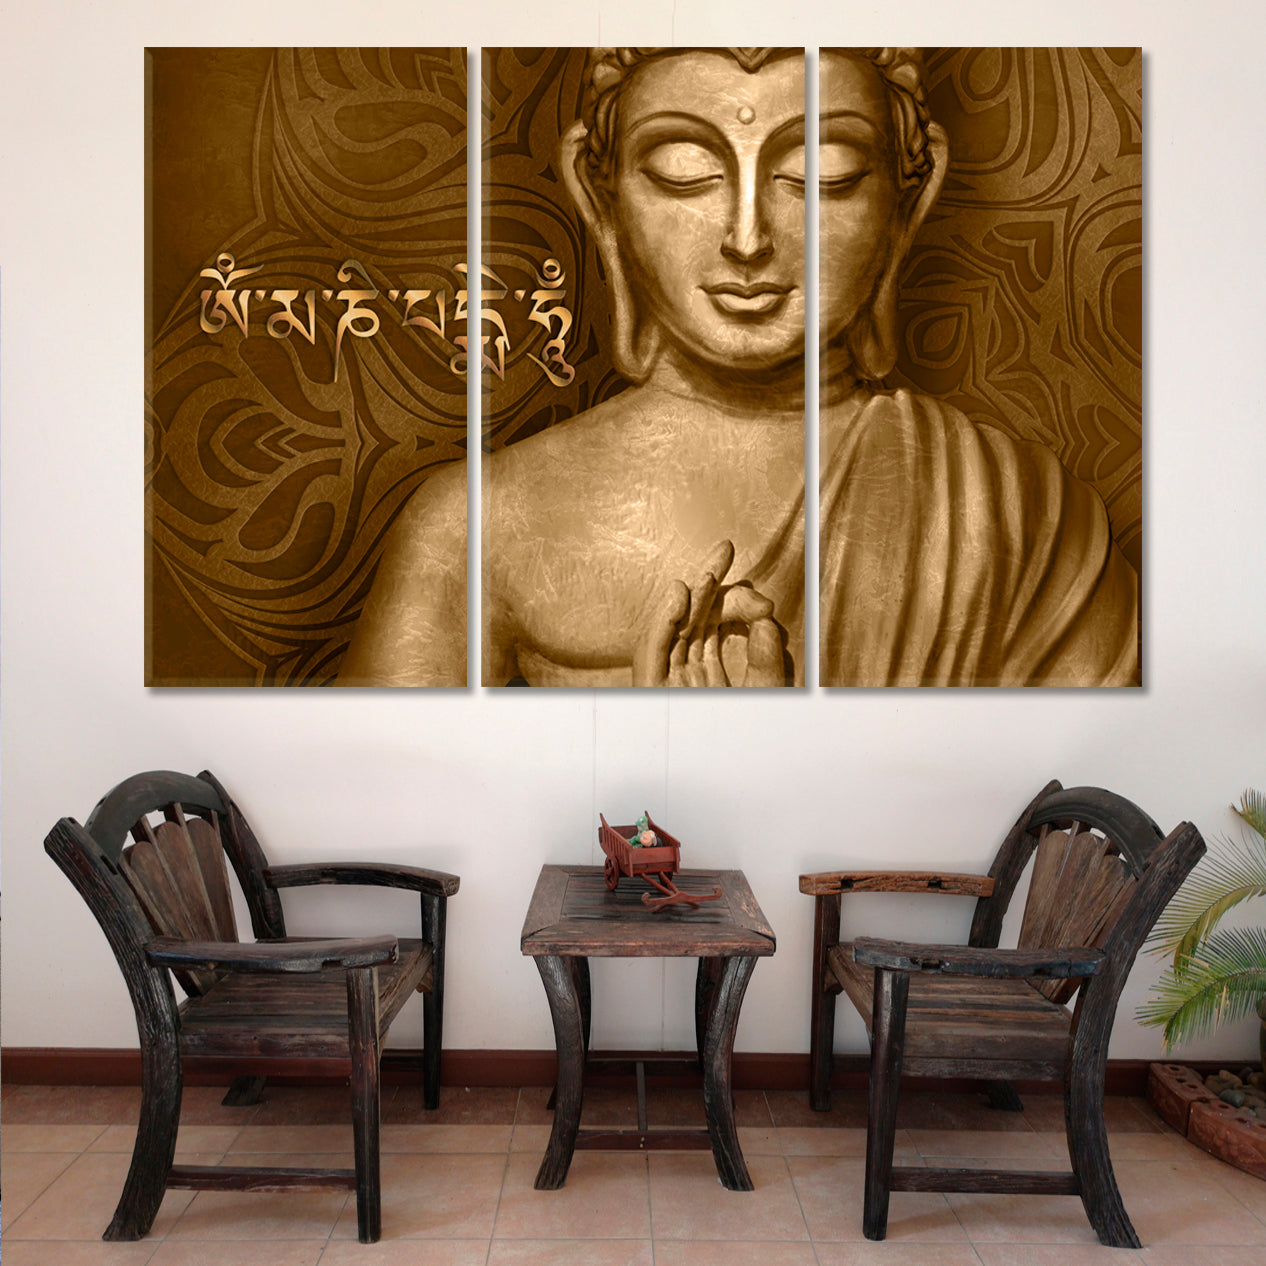 Buddha Mantra Om Mani Padme Hum Religious Modern Art Artesty 3 panels 36" x 24" 